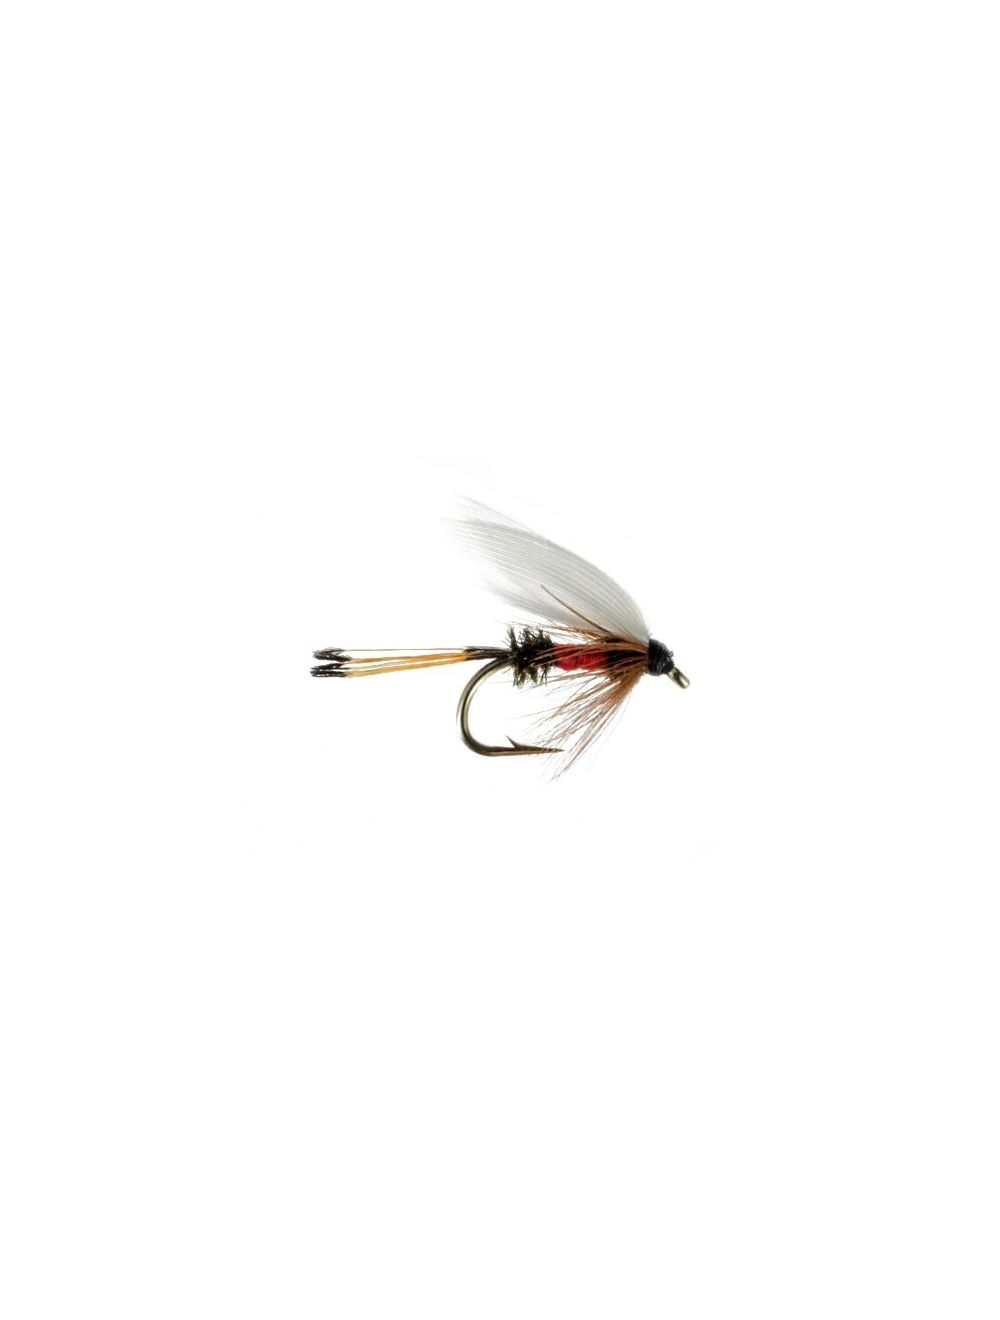 Steelhead - Royal Treatment Fly Fishing